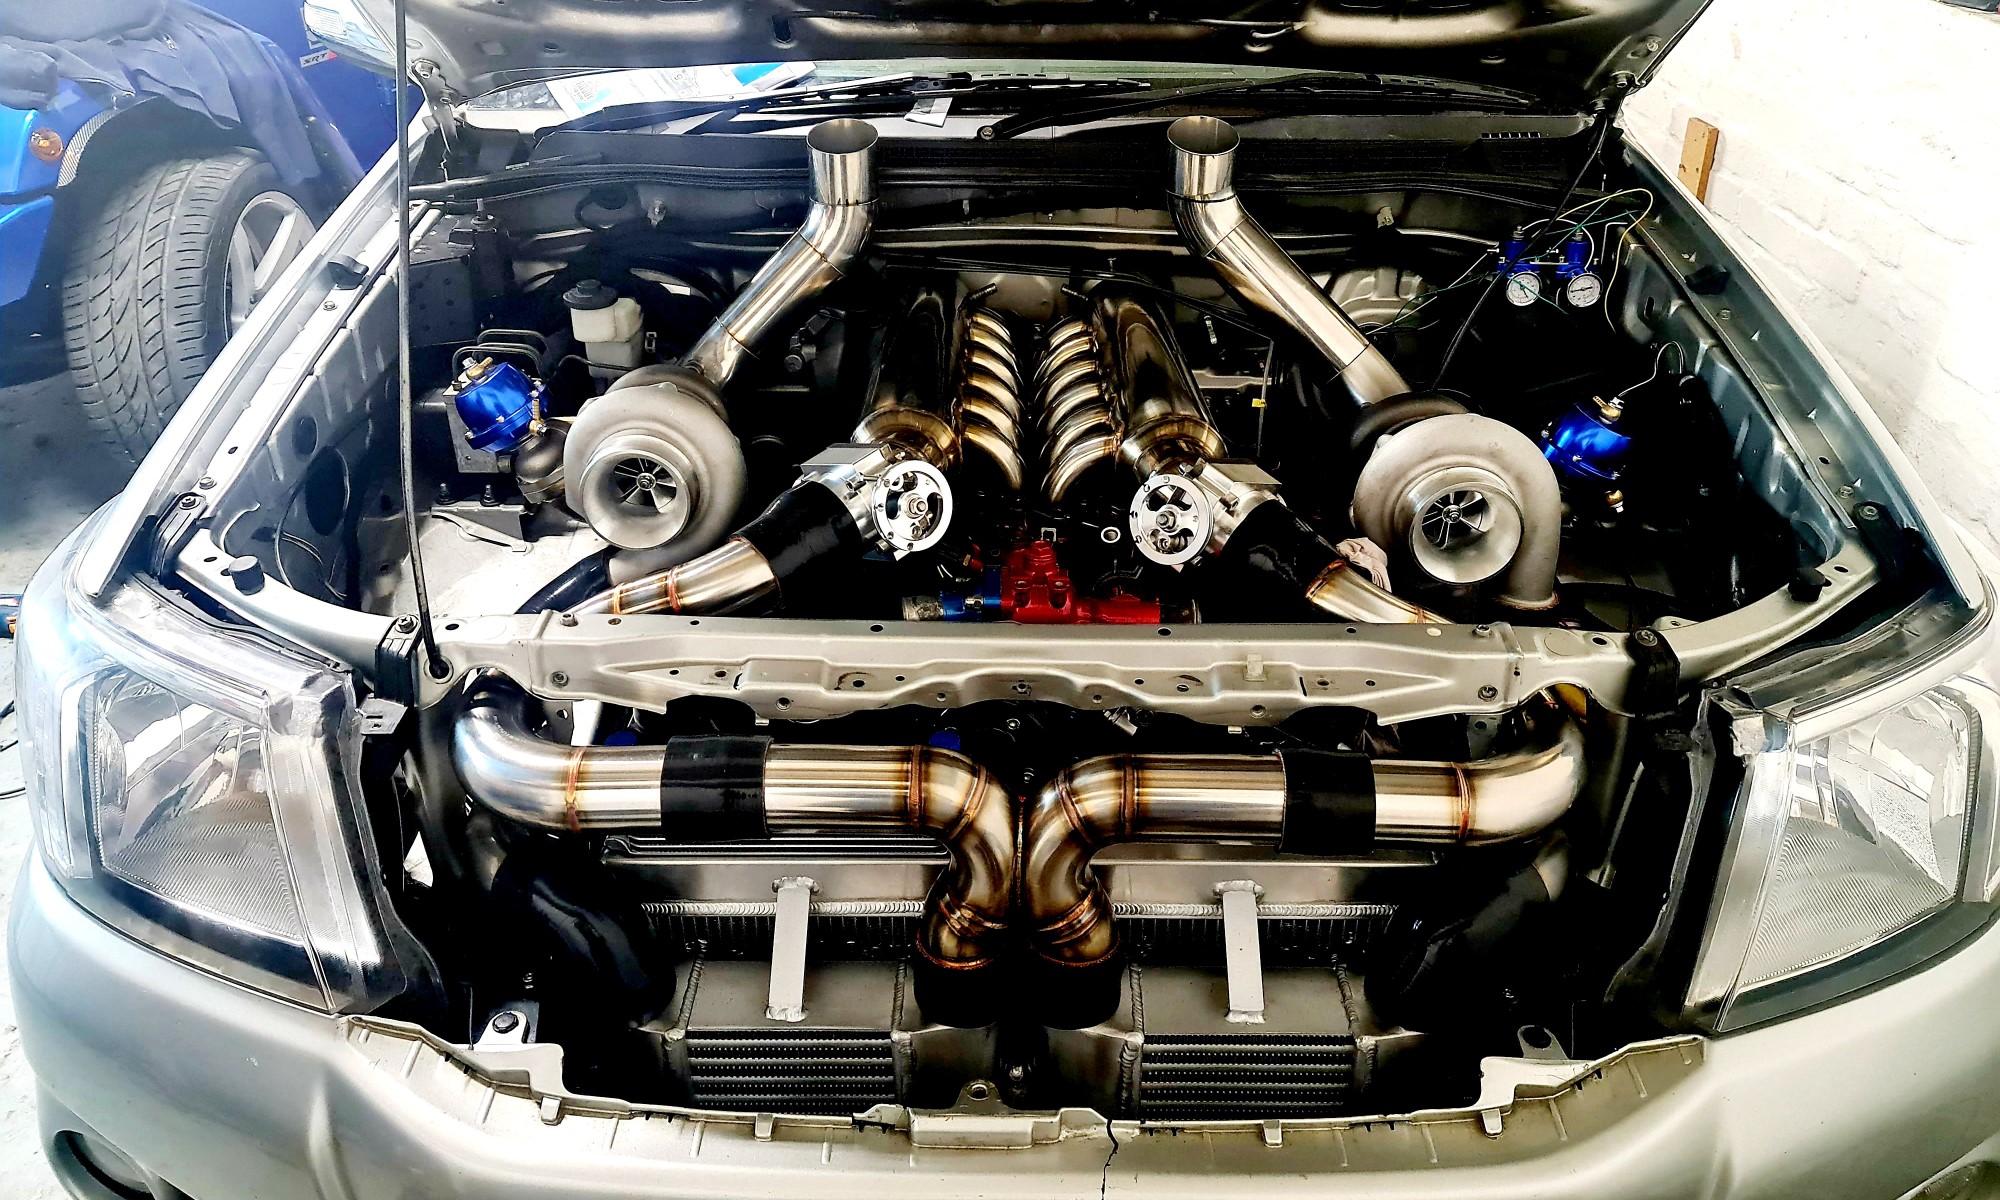 Twin-turbo V12 Toyota Hilux engine bay